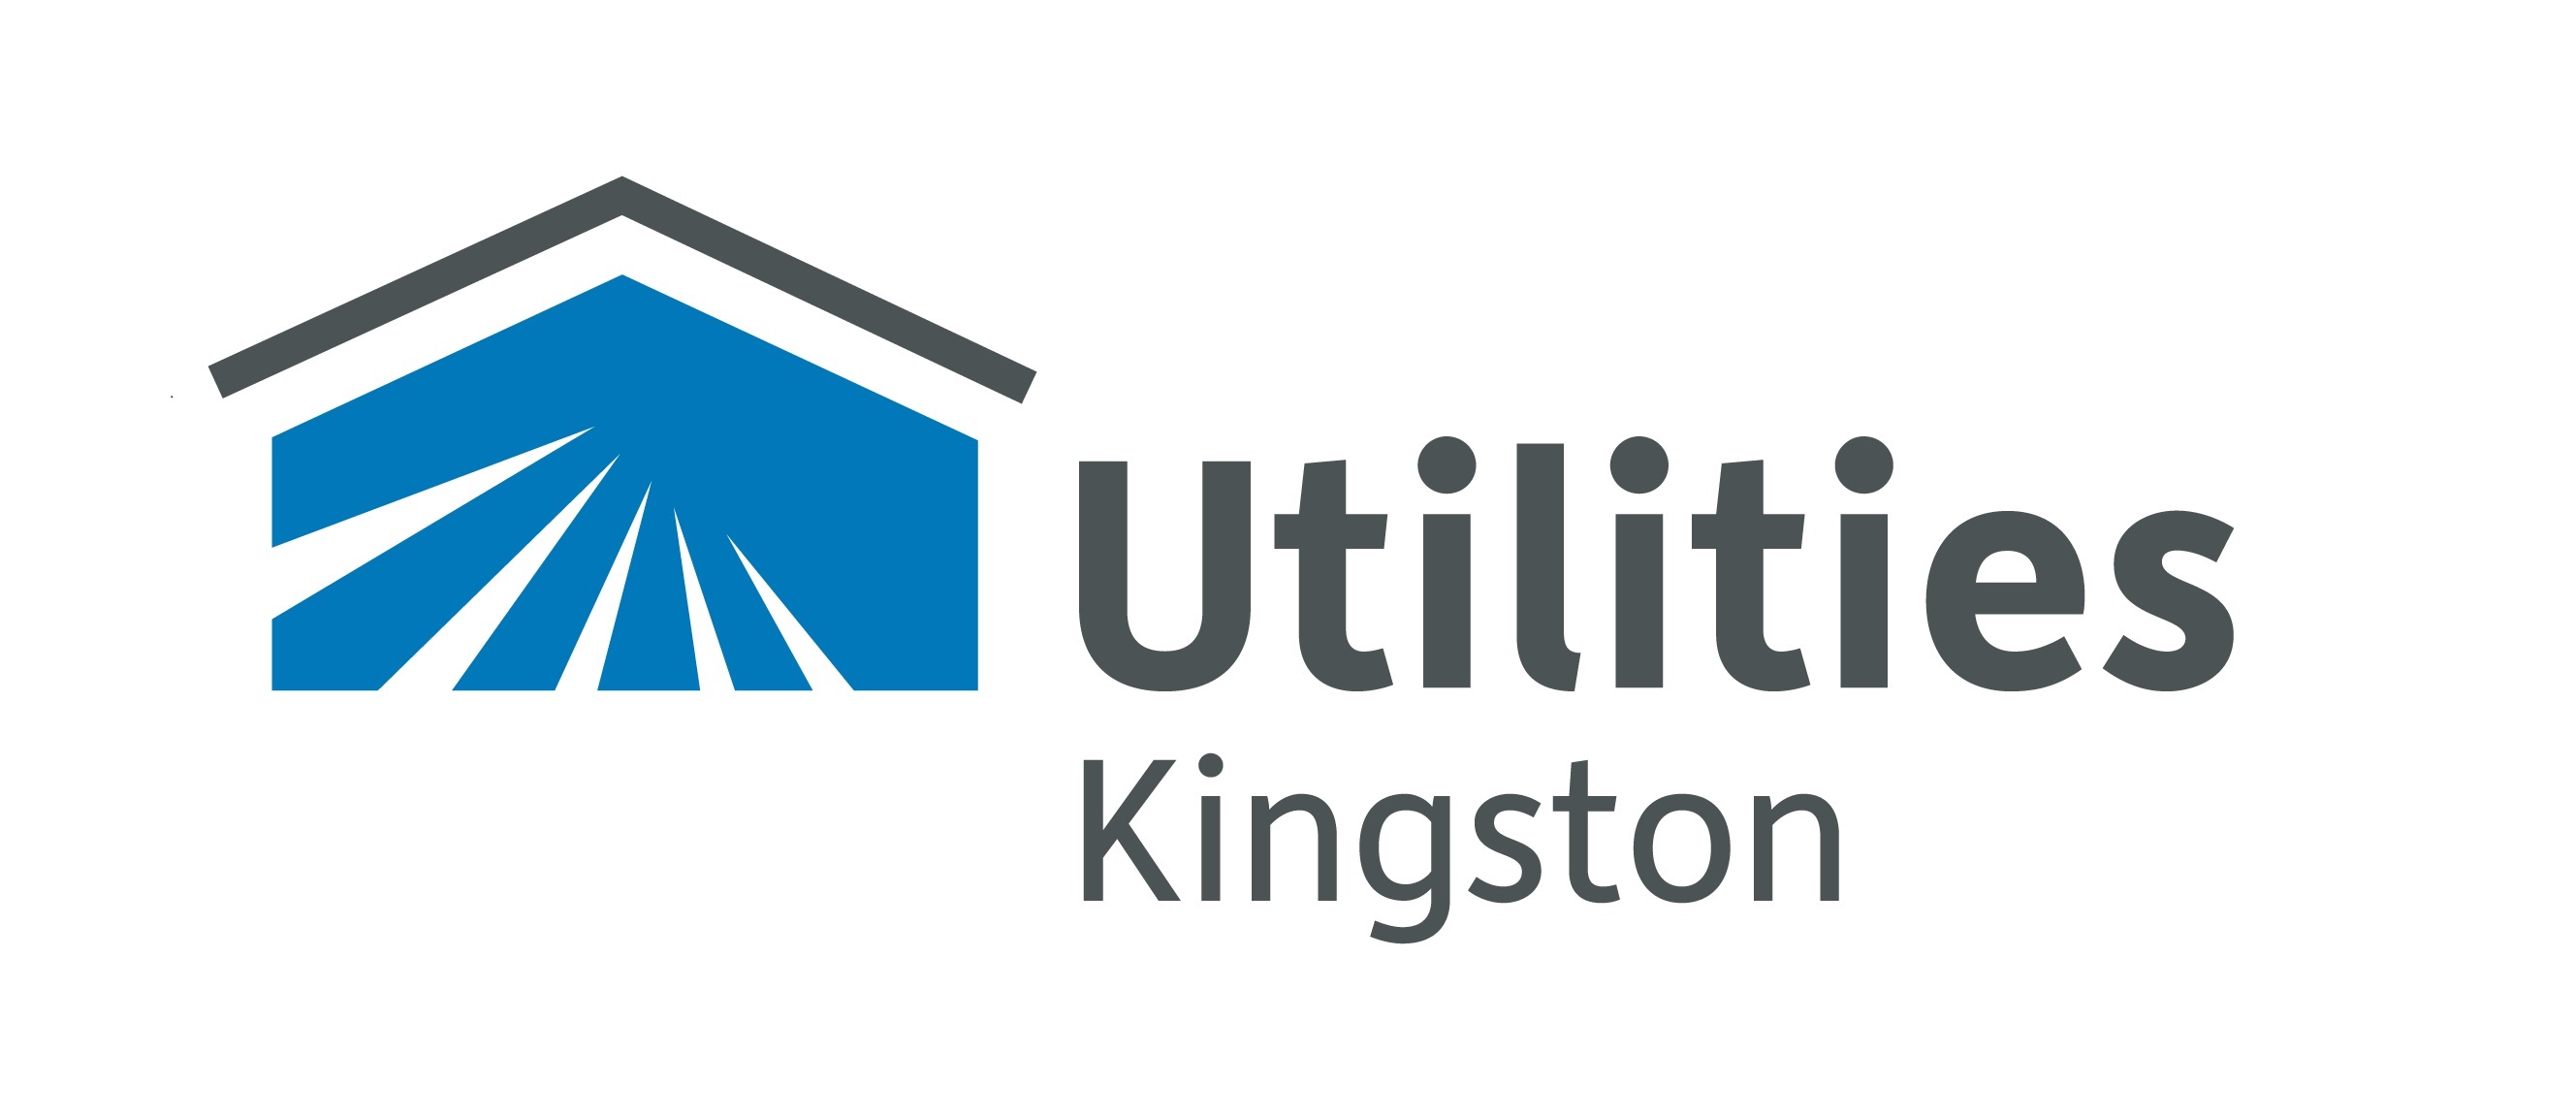 Utilities Kingston